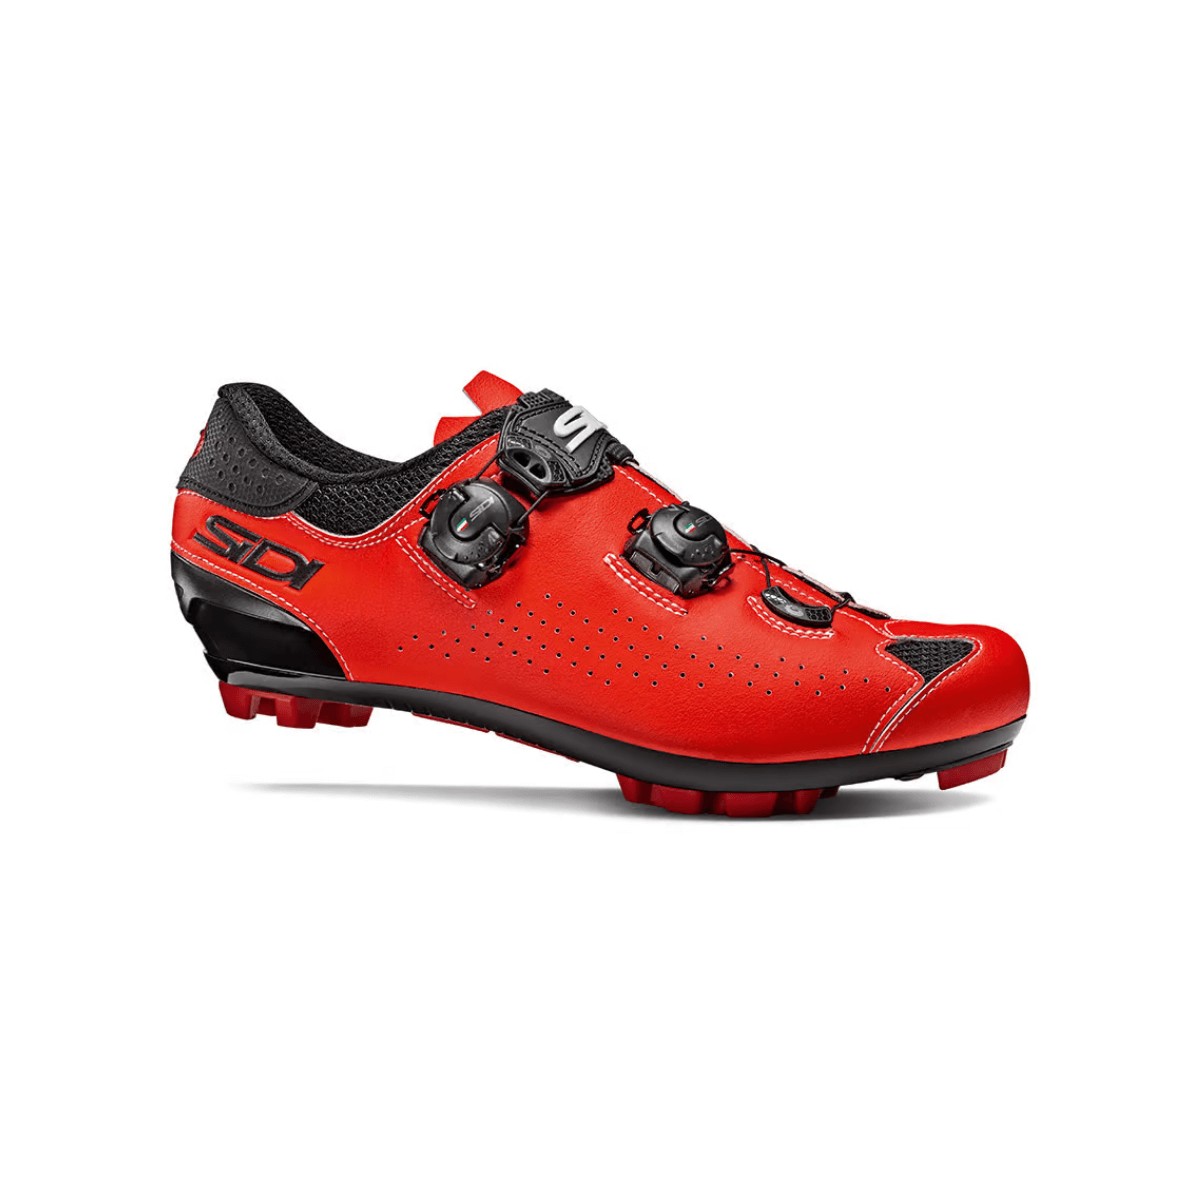 Sidi Eagle 10 MTB Shoes Red Black, Size 46 - EUR